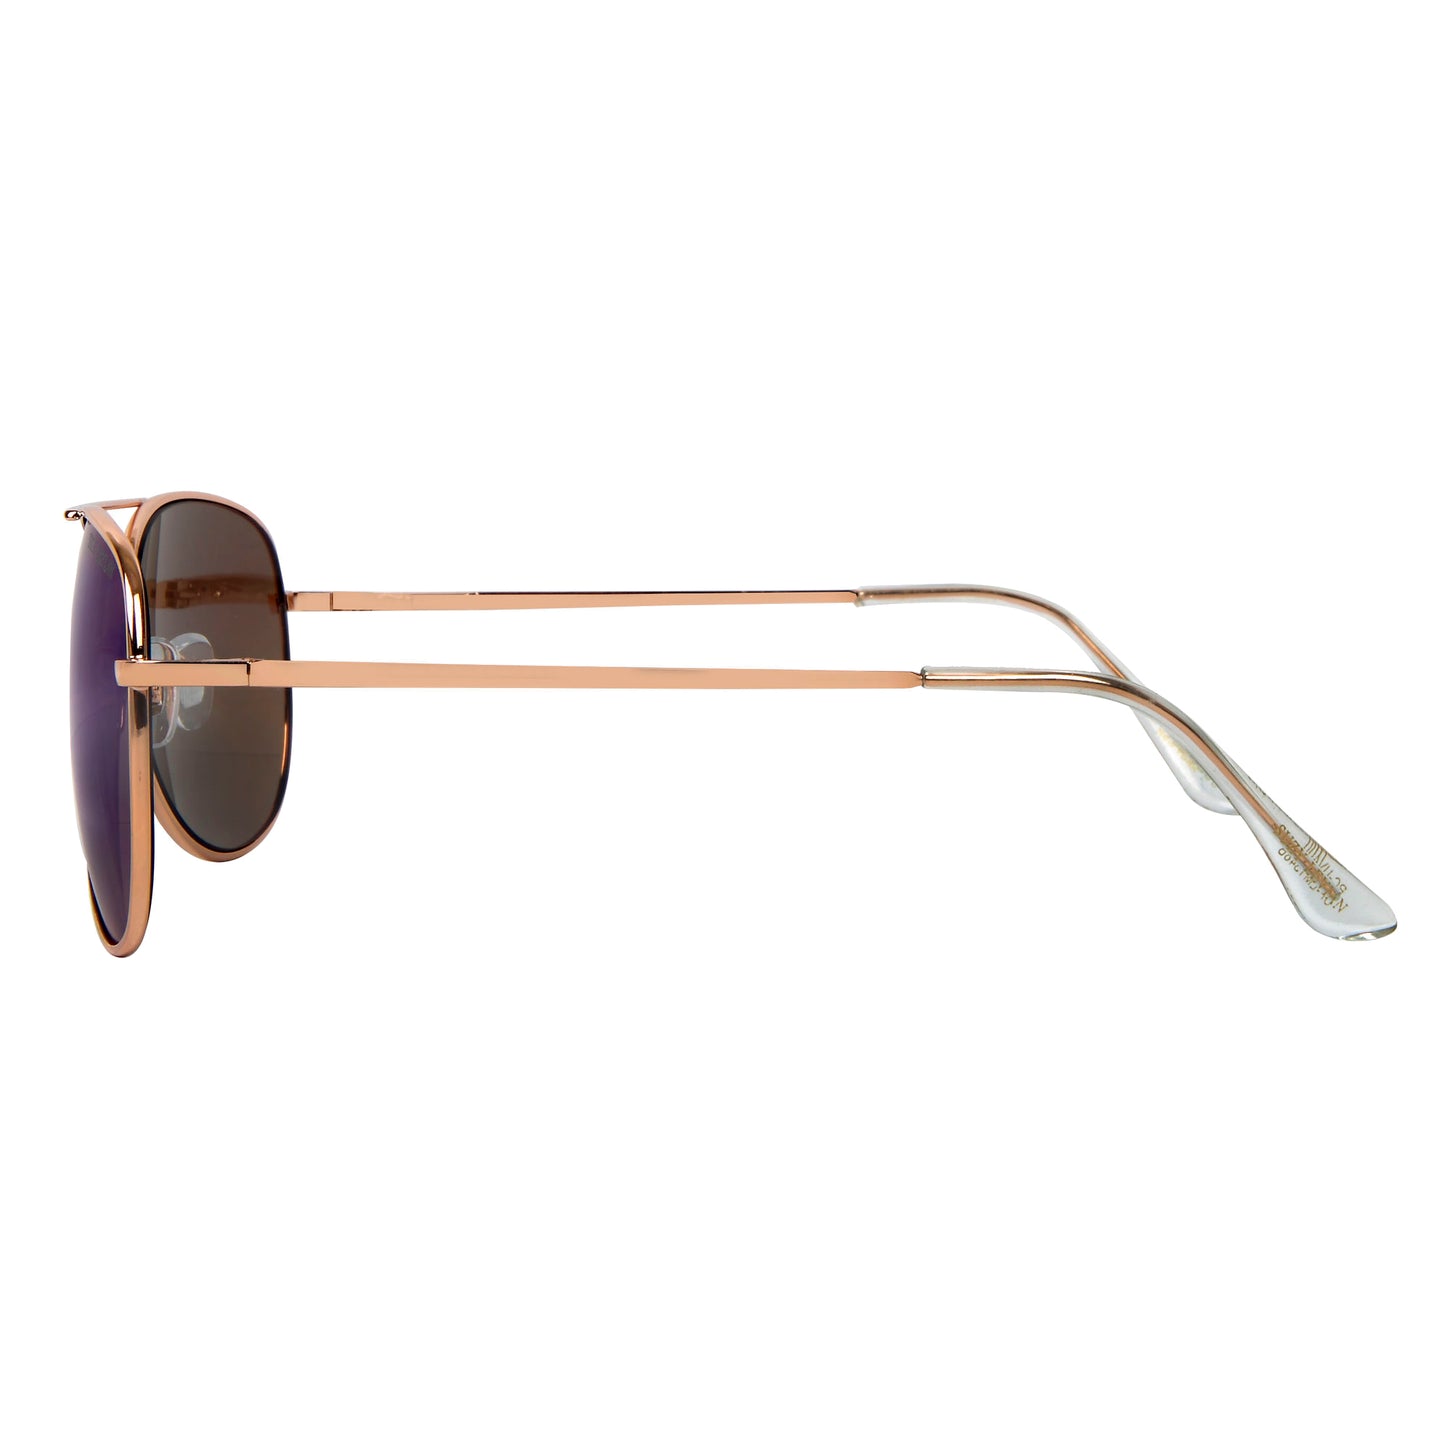 Suzy Levian Women's Blue Reflector Mirrored Aviator Classic Gold Frame Sunglasses